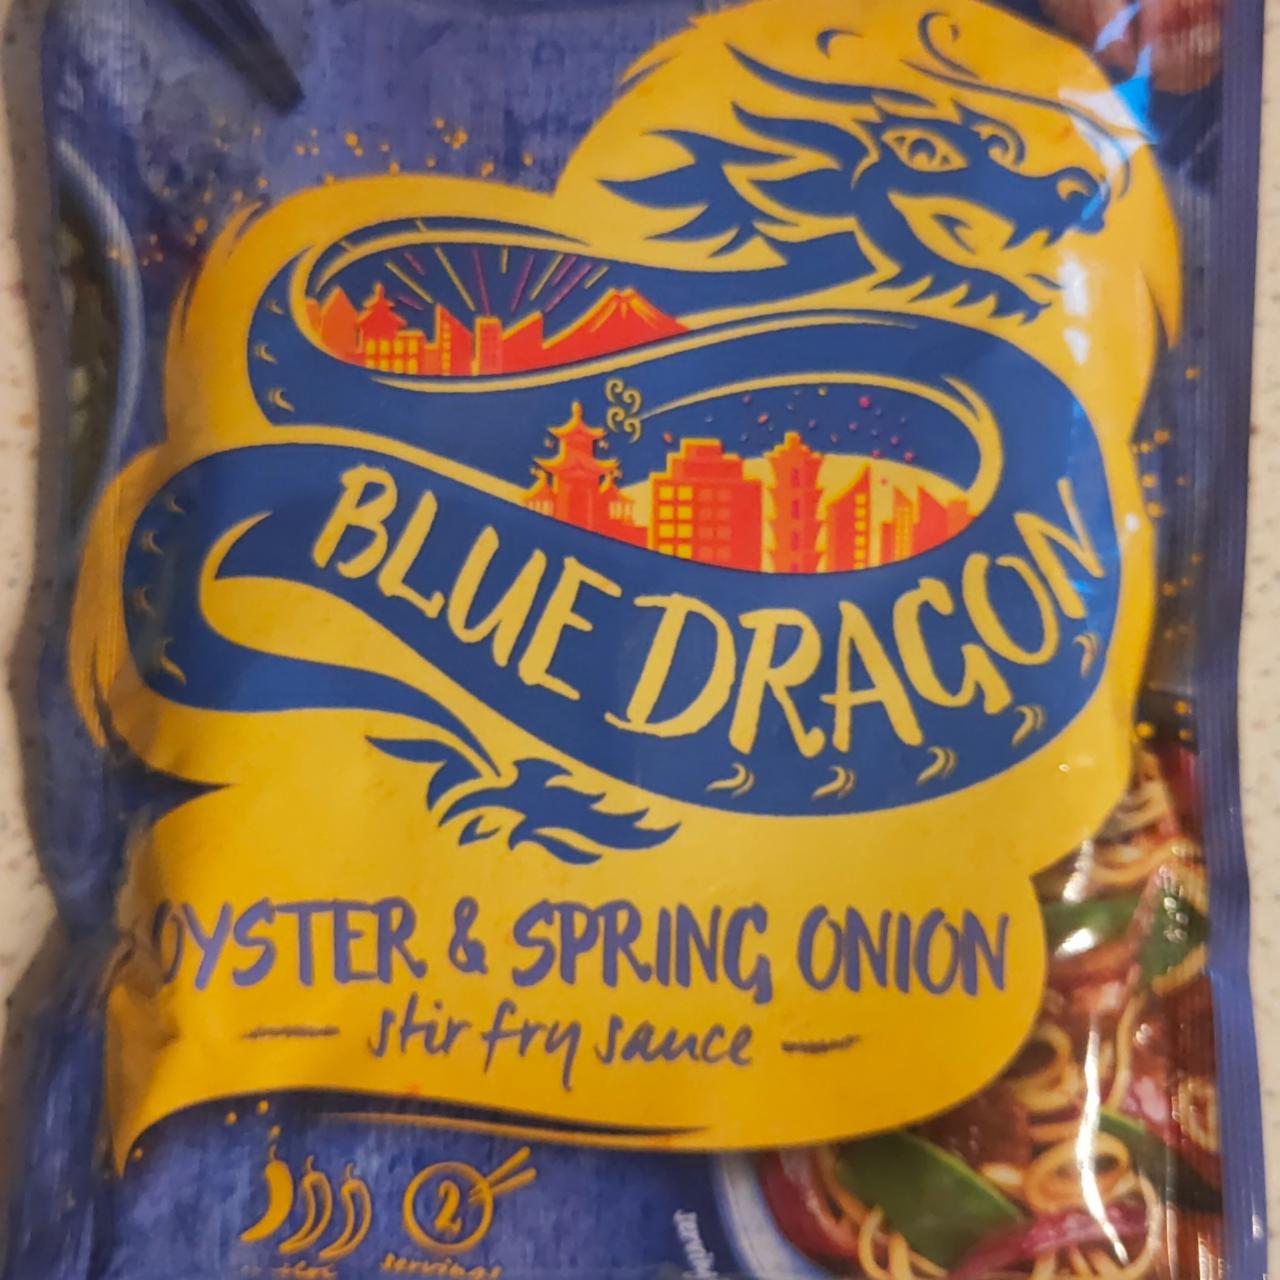 Fotografie - Oyster & Spring Onion stir fry sauce Blue Dragon